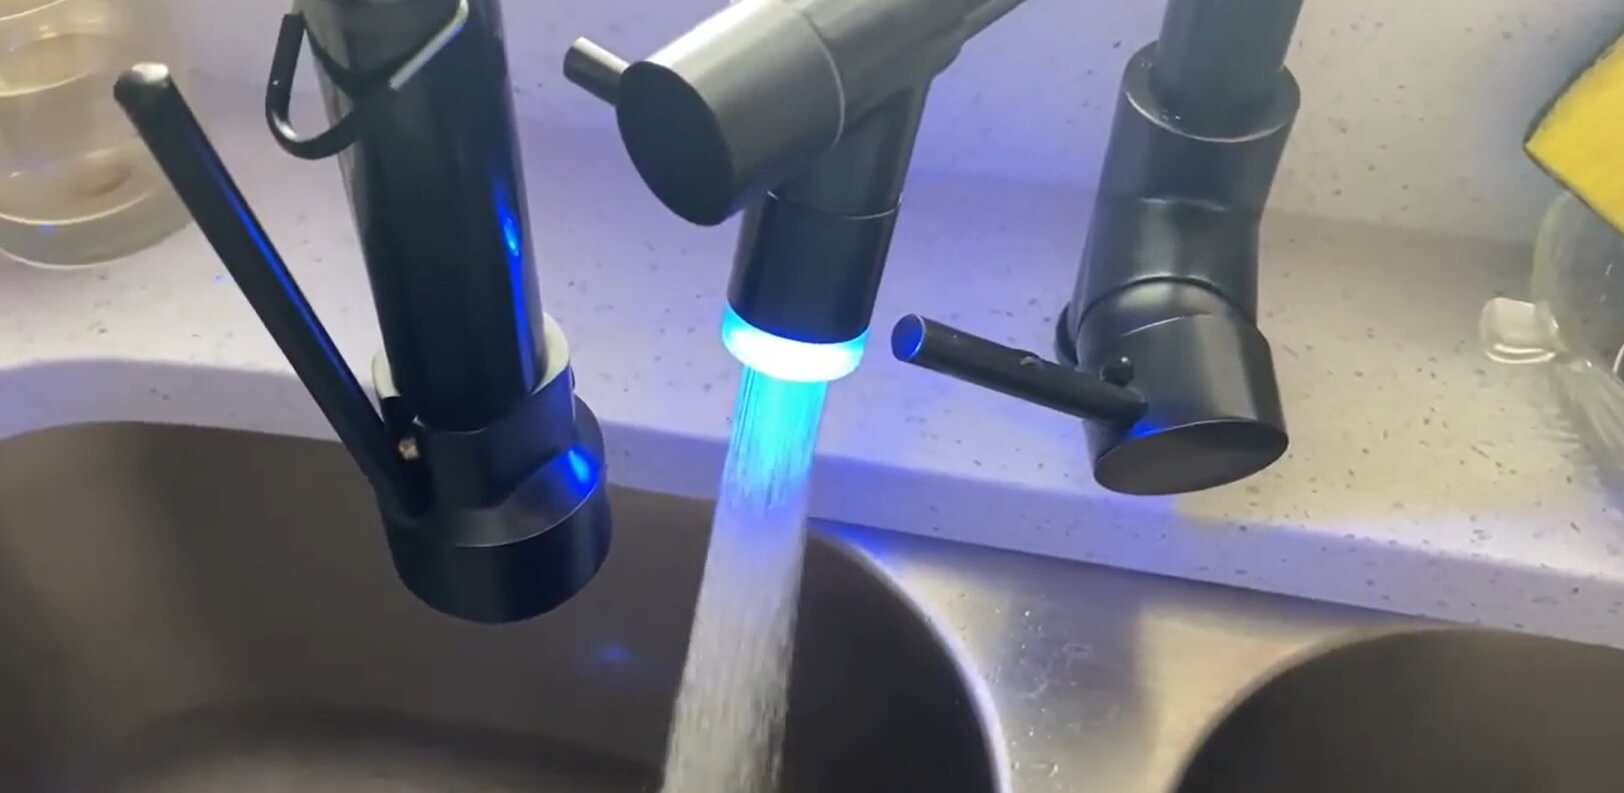 touchless LED light faucet